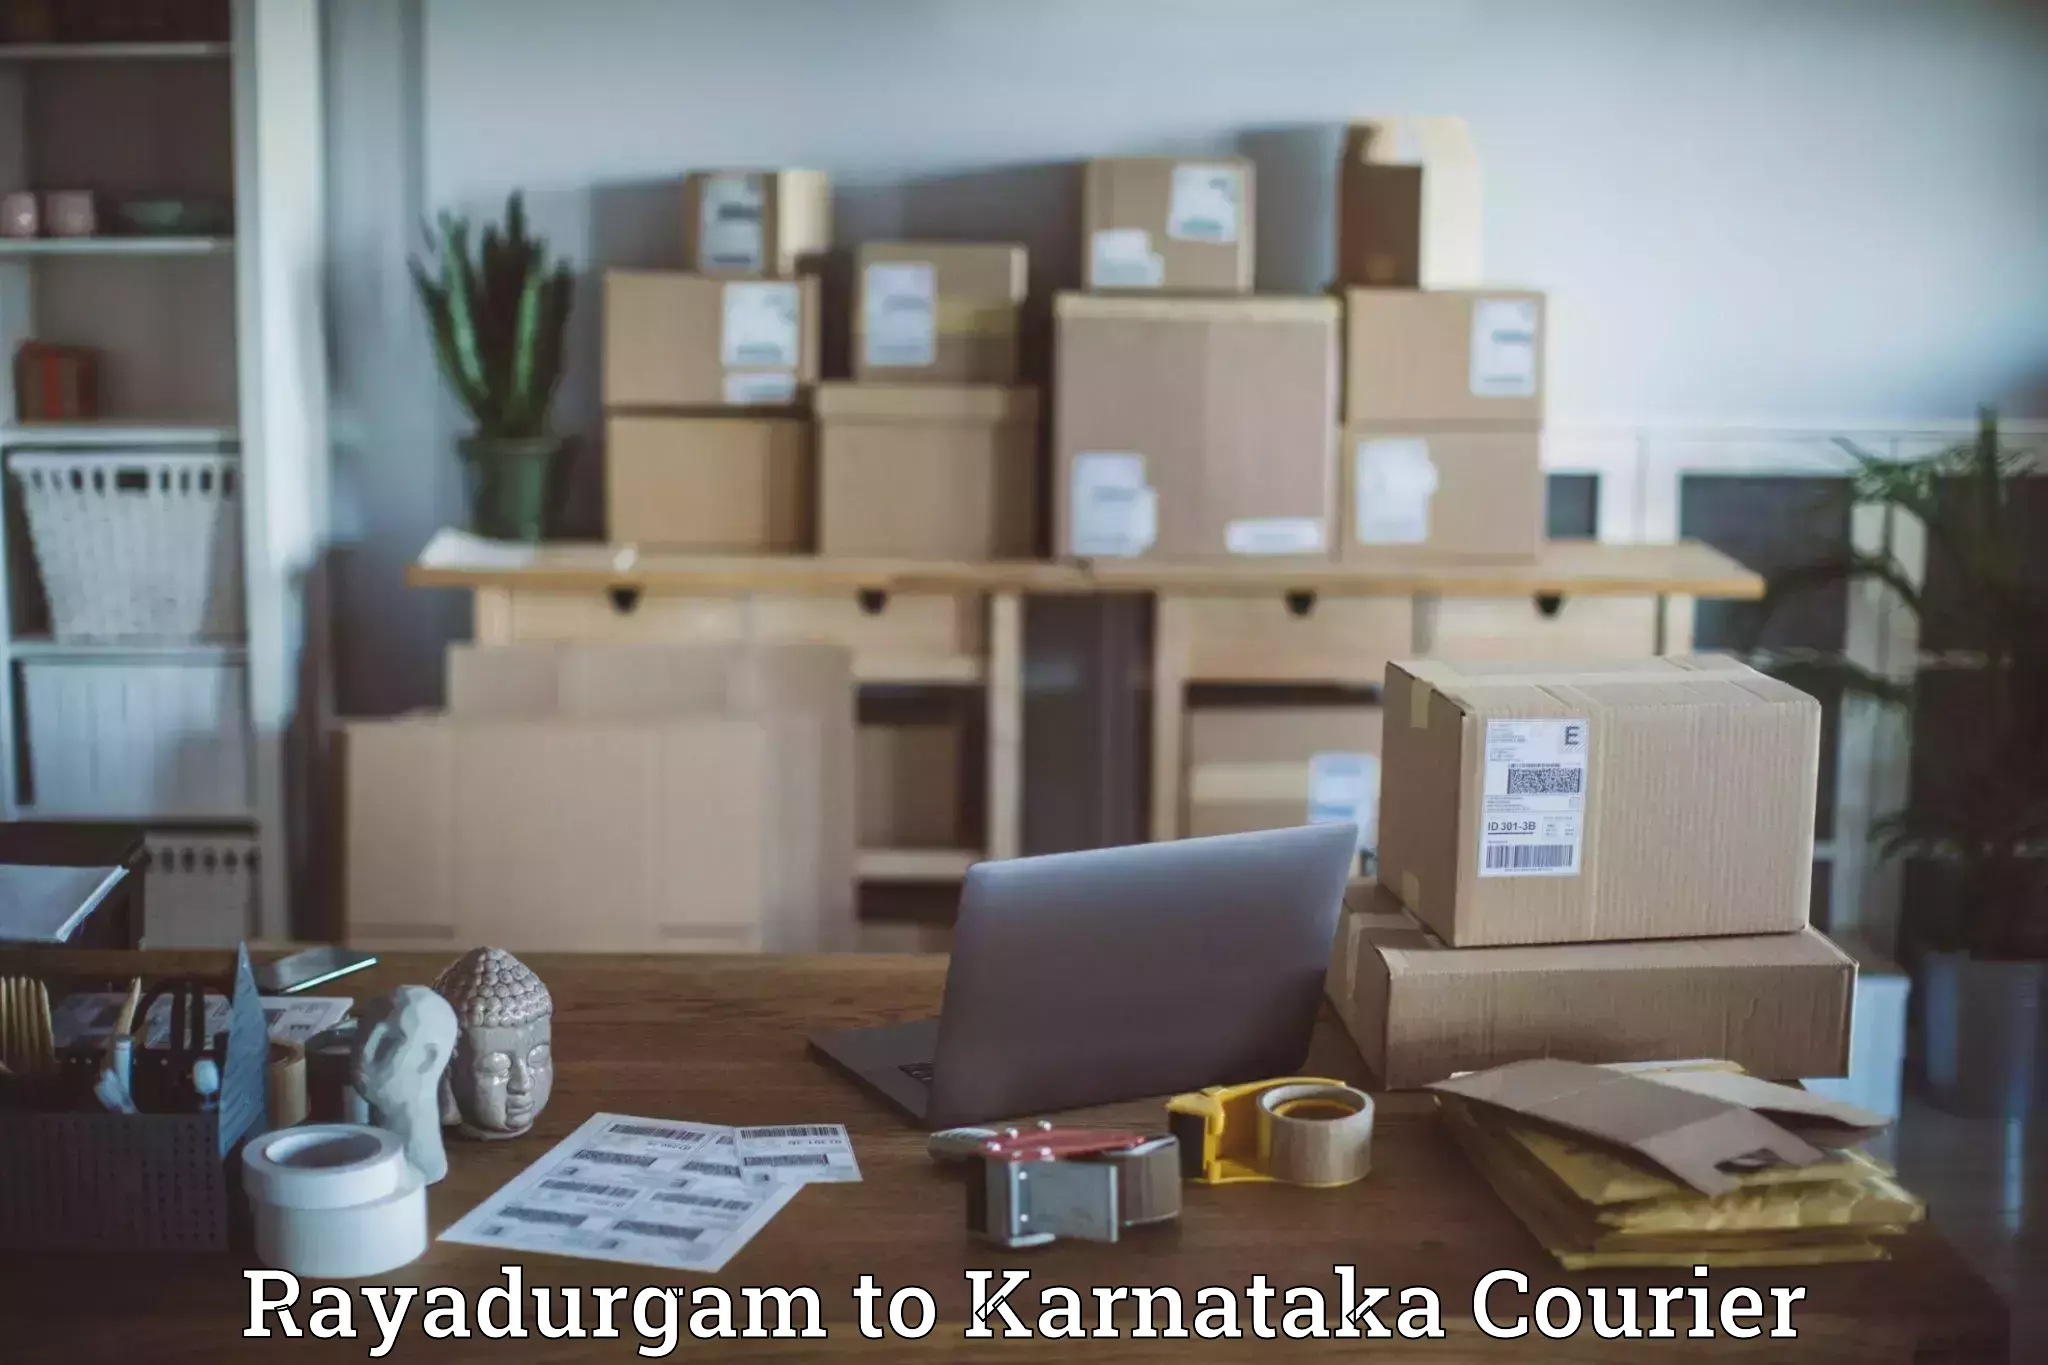 State-of-the-art courier technology Rayadurgam to Karnataka